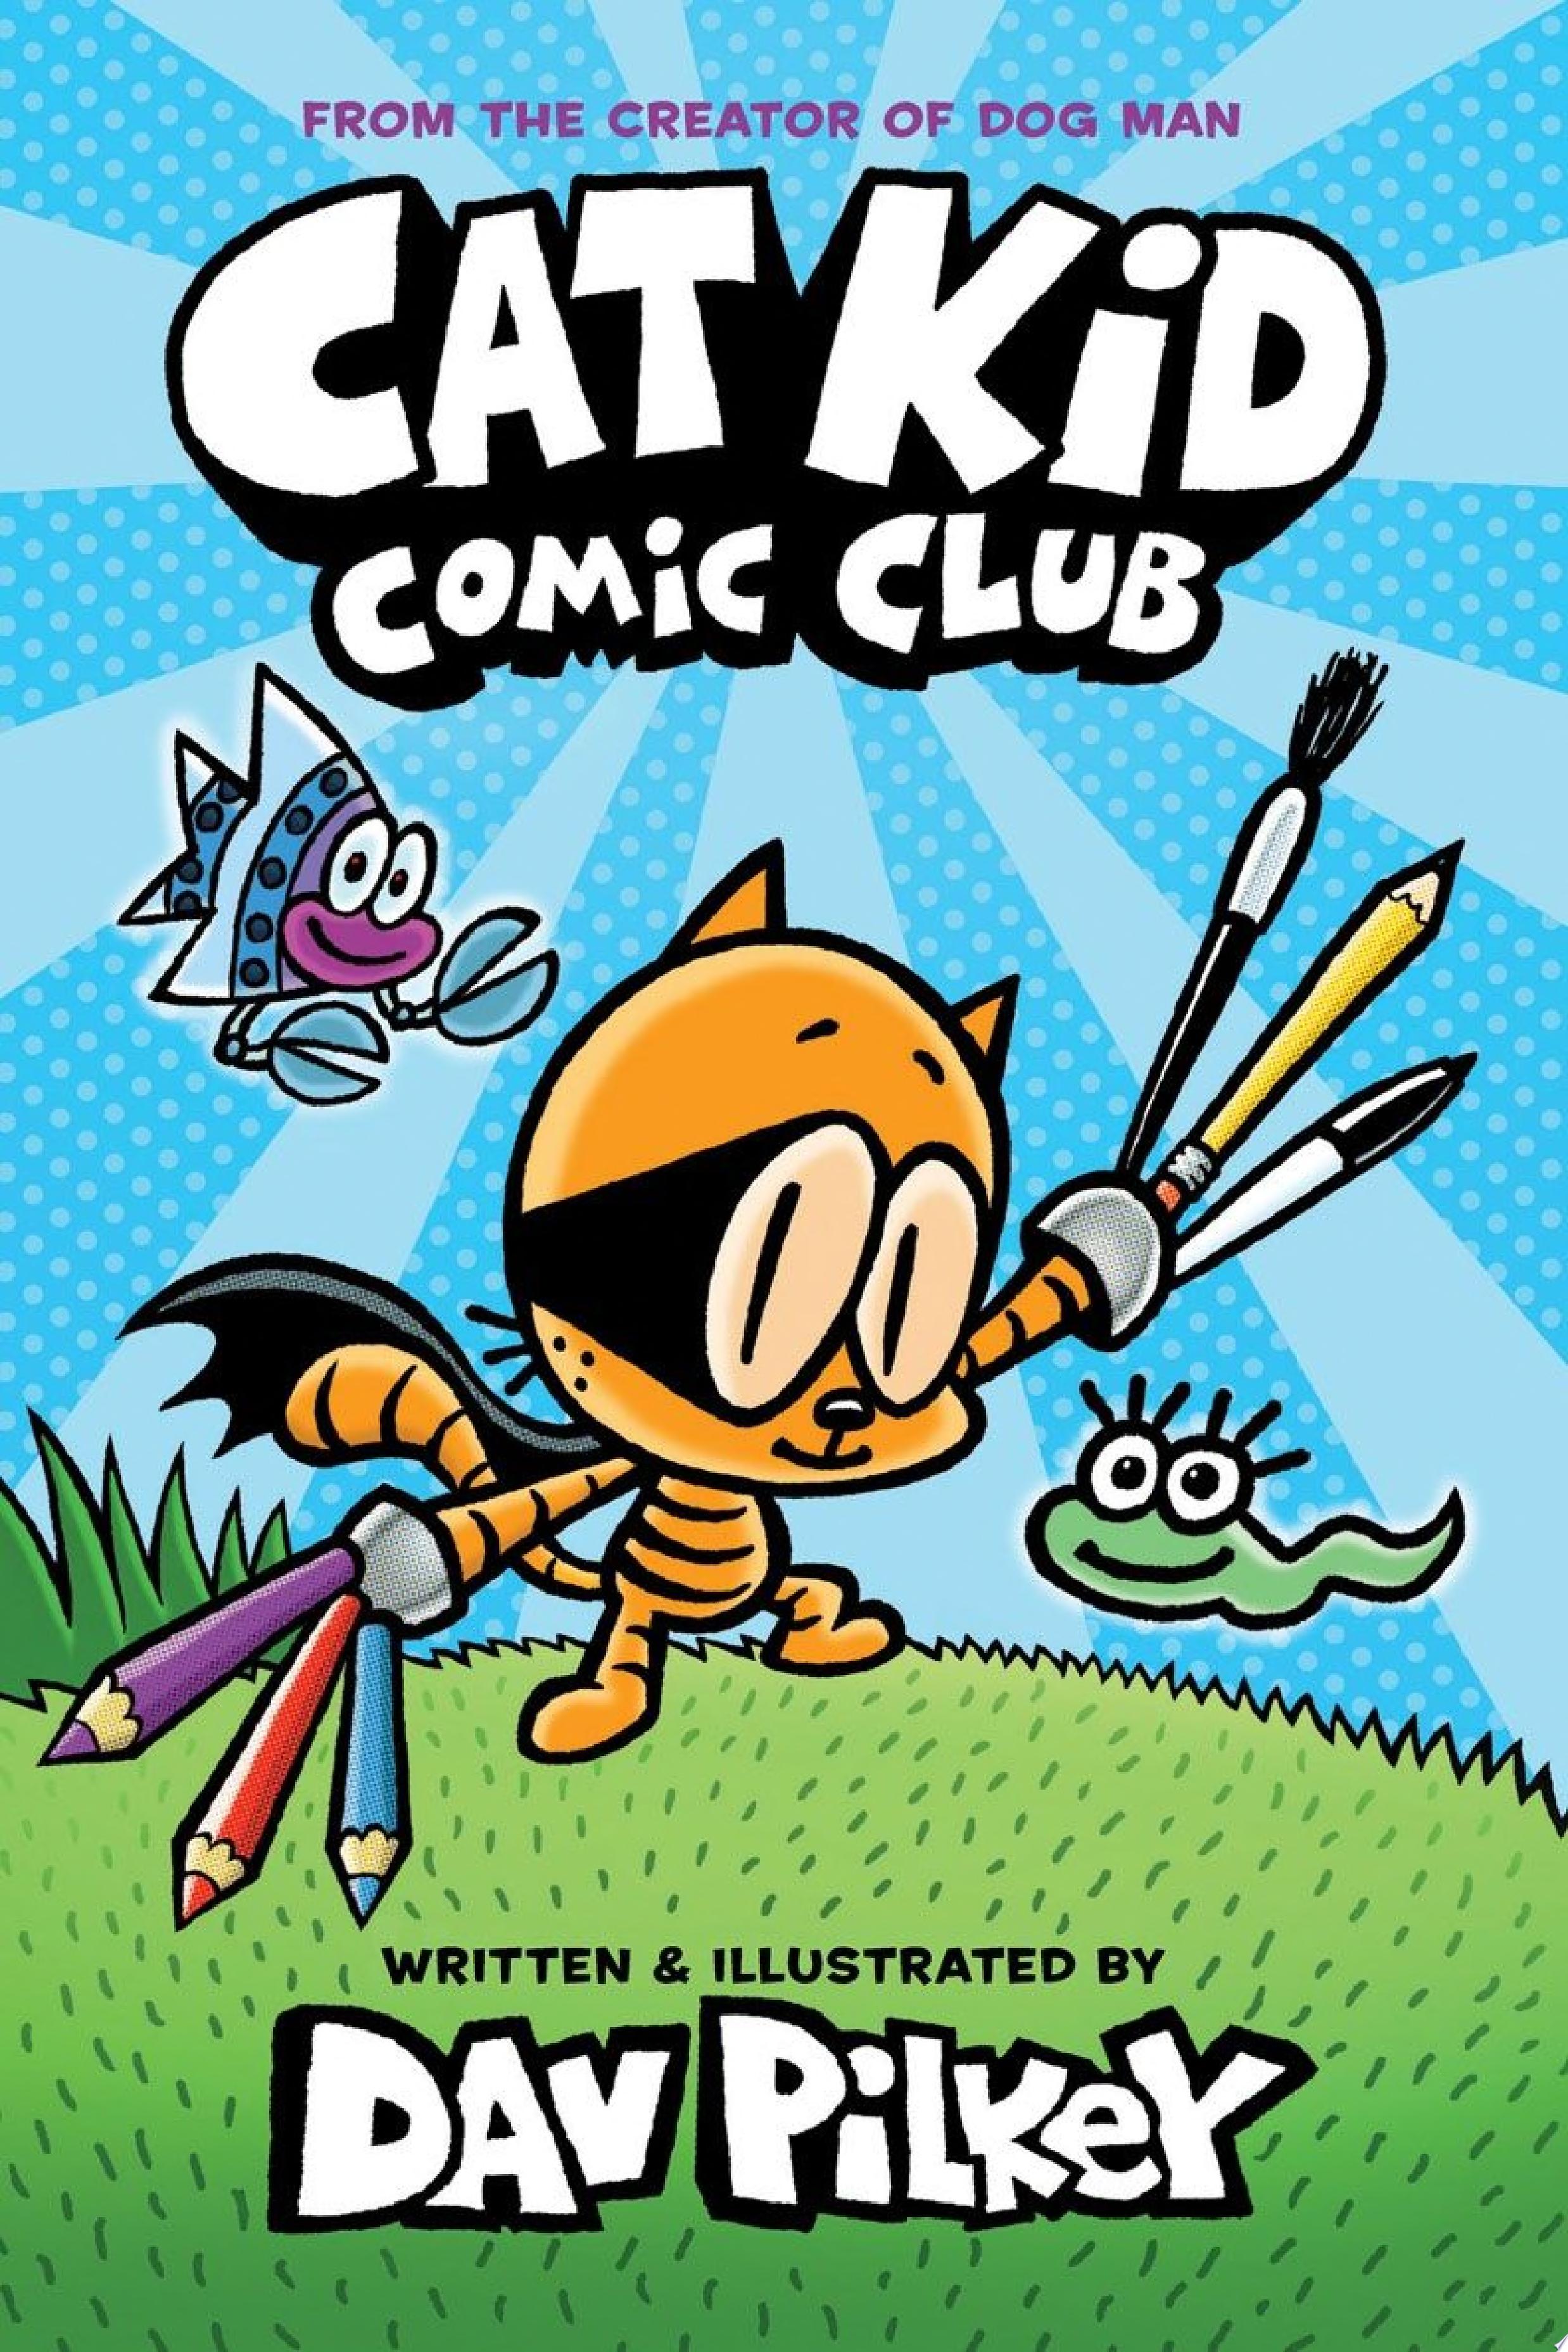 Image for "Cat Kid Comic Club: Volume 1"